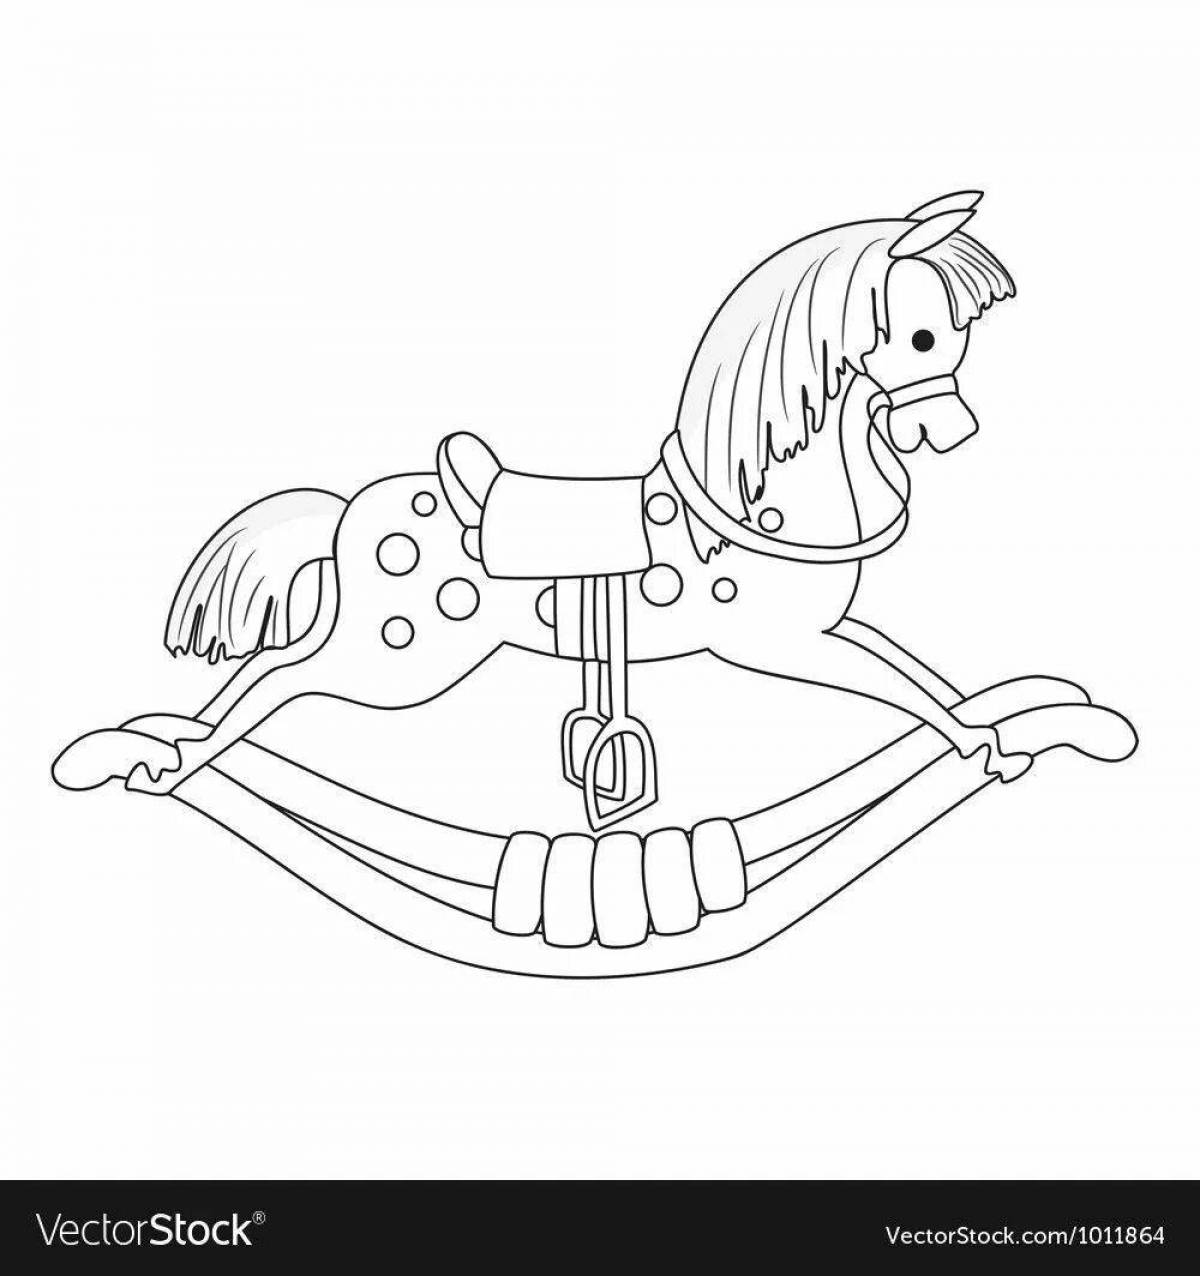 A fun rocking horse coloring book for preschoolers